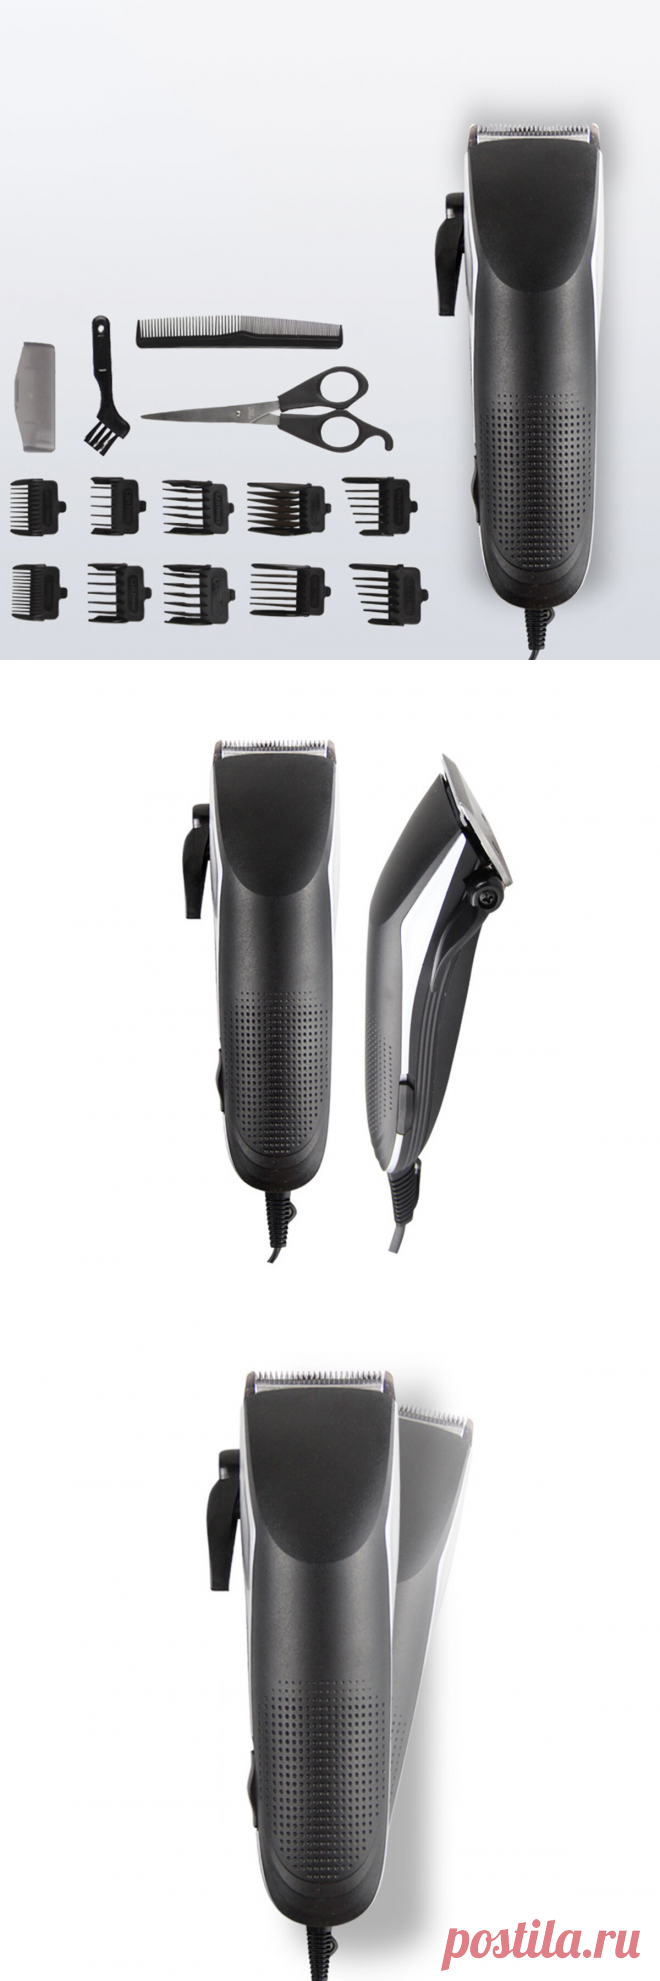 12w electric hair trimmer clipper kit haircut professional cutting machine tools at Banggood